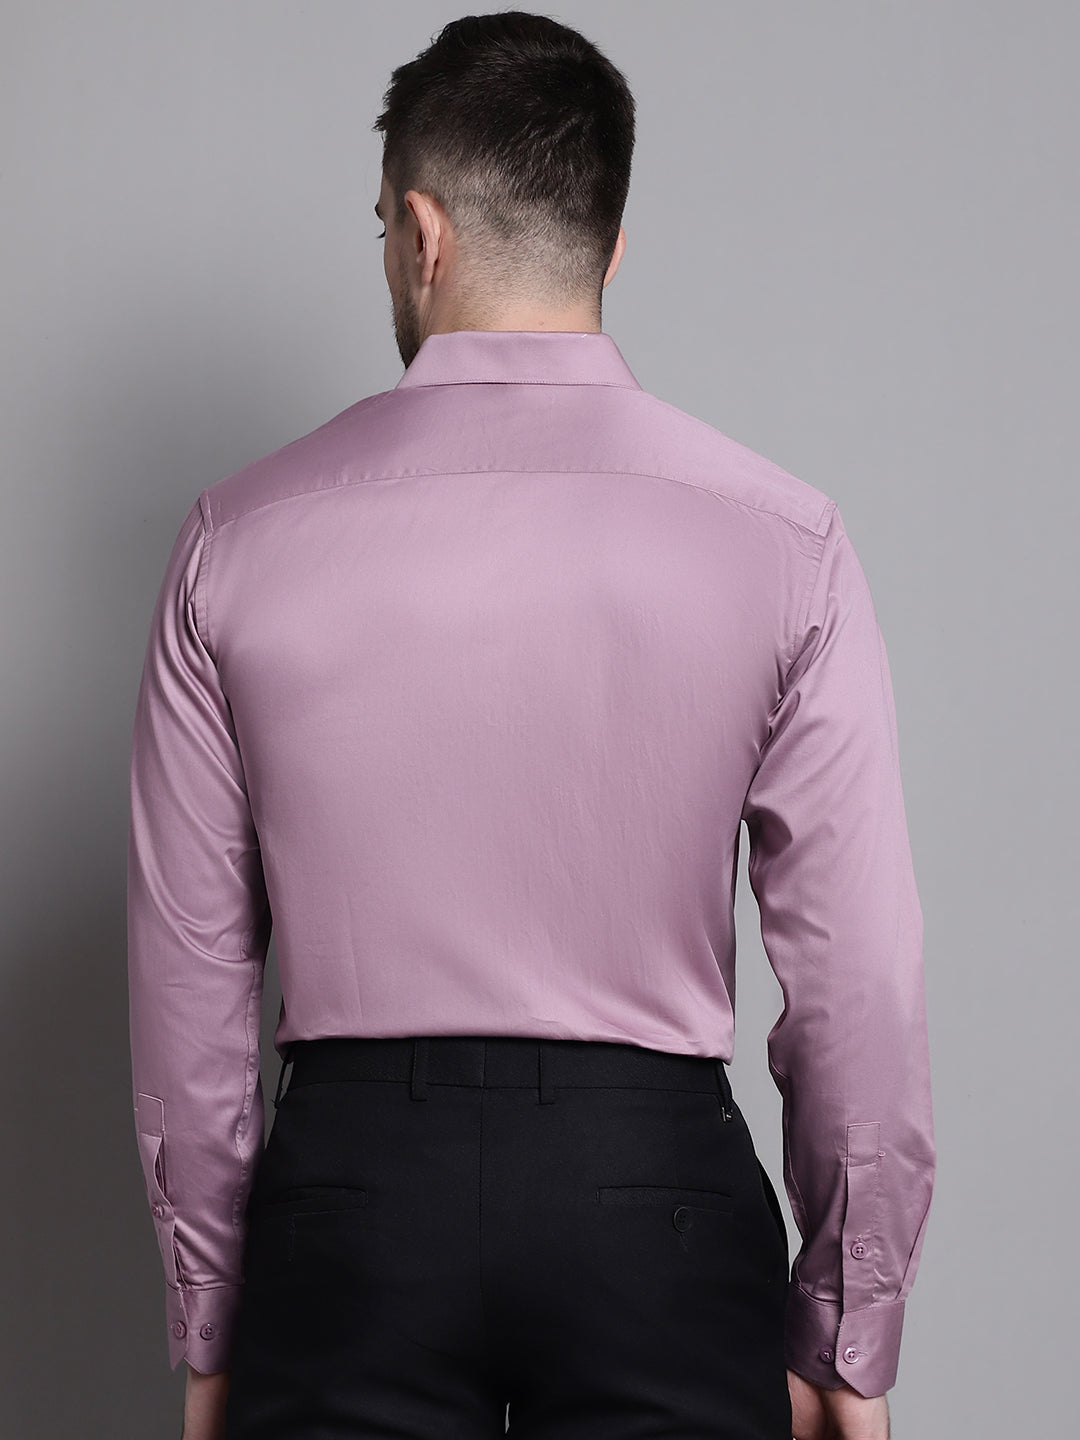 Men's Cotton Solid Formal Shirt ( SF 883 Magenta )